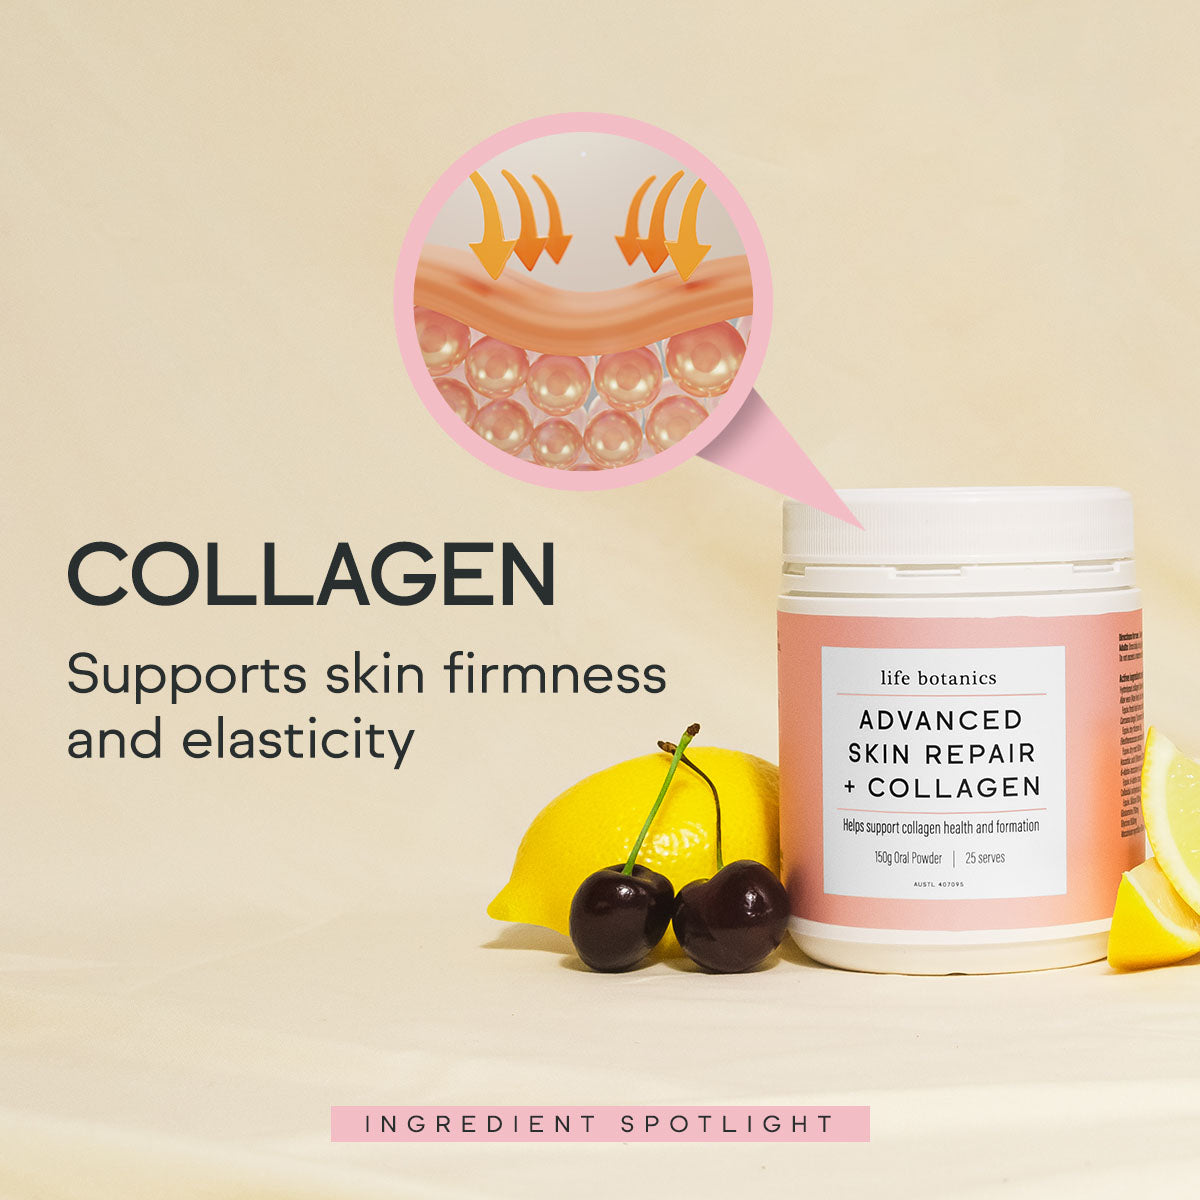 life botanics Advanced Skin Repair + Collagen Health Benefits 180